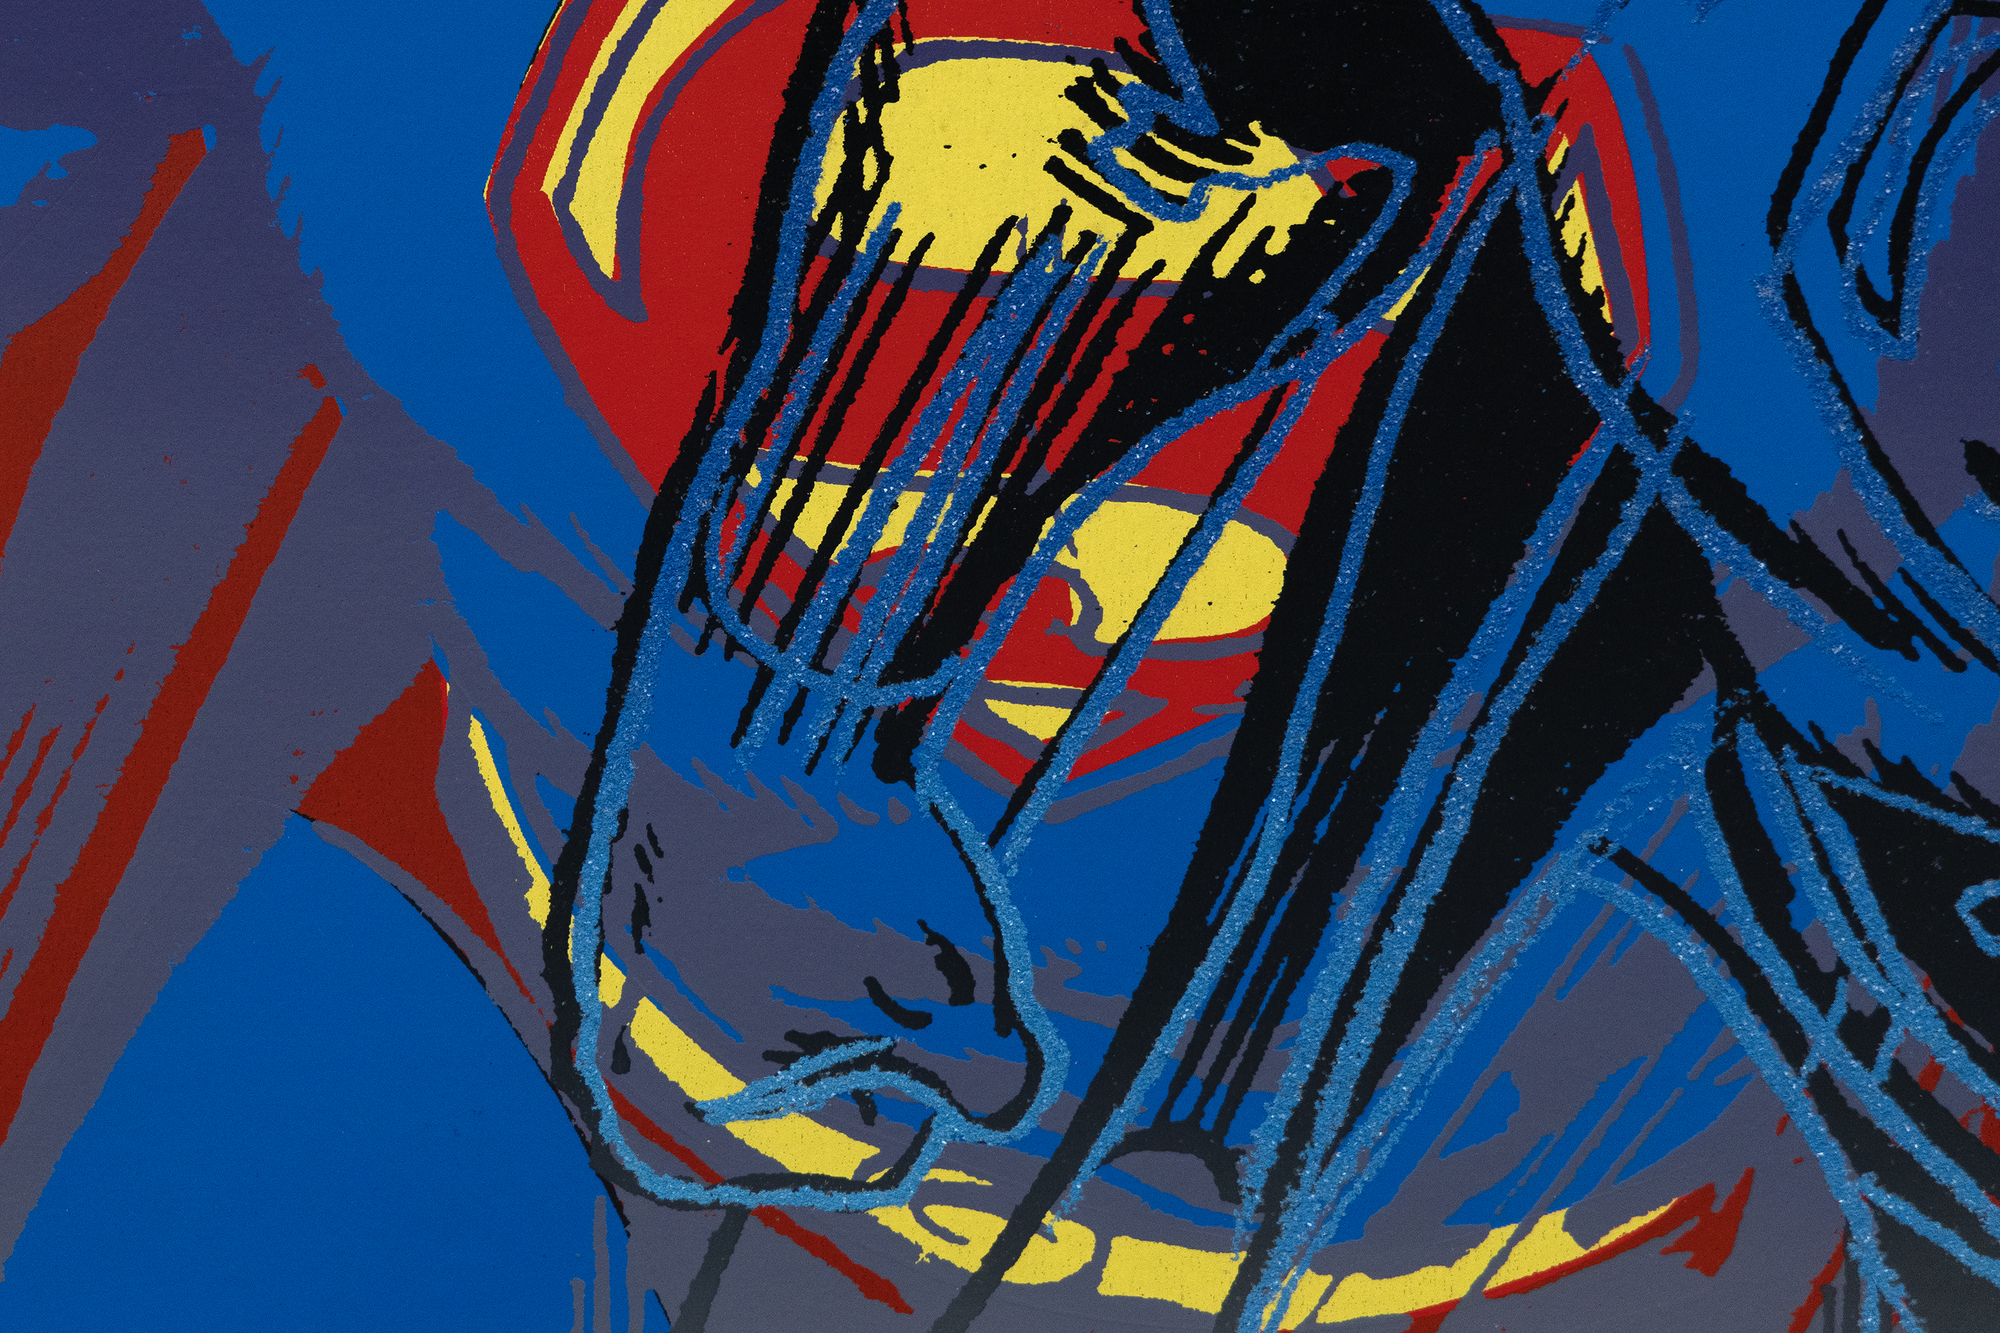 ANDY WARHOL - Superman (II.260) - sérigraphie - 38 x 38 in.